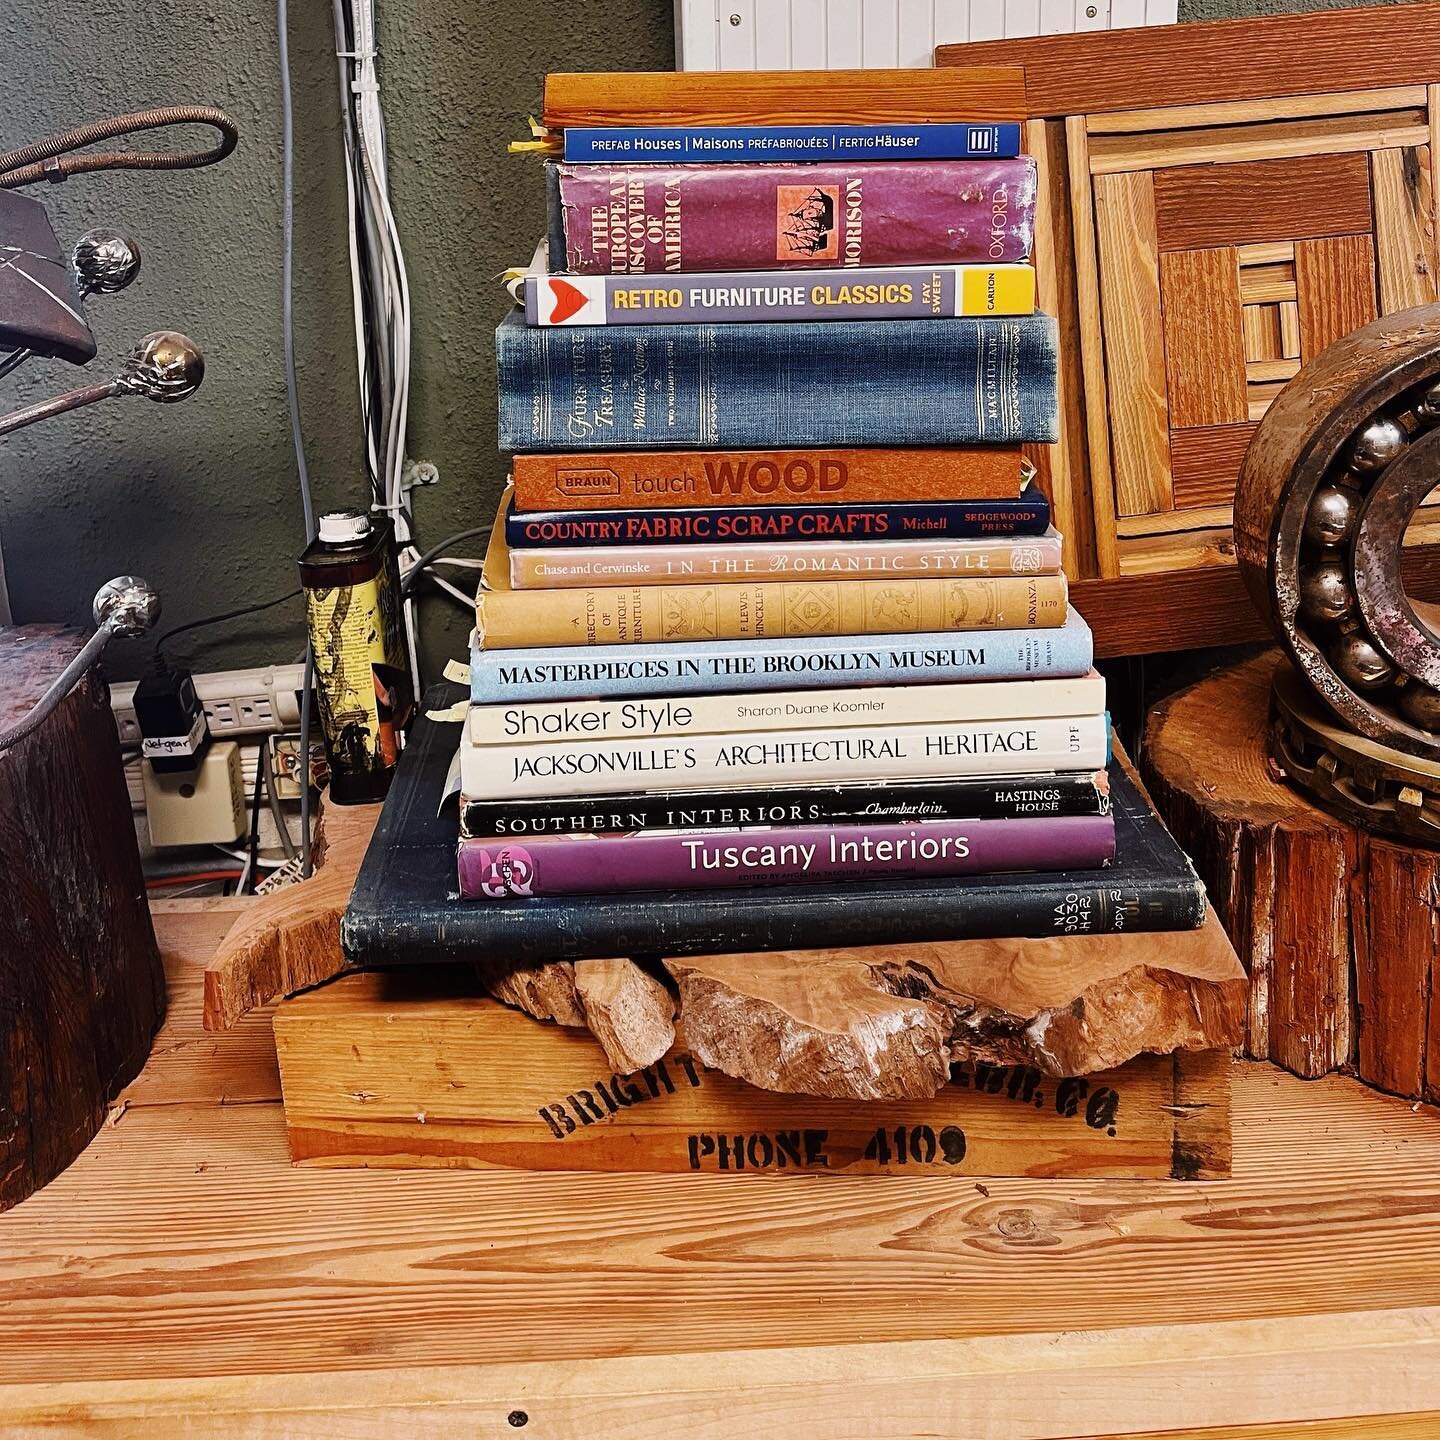 Books in every nook and cranny #aroundtheshop. 

#interiordesign #wood #midcenturymodern #books #read #southernpine #antiquepine #furnituredesign #design #woodworking #savannahga